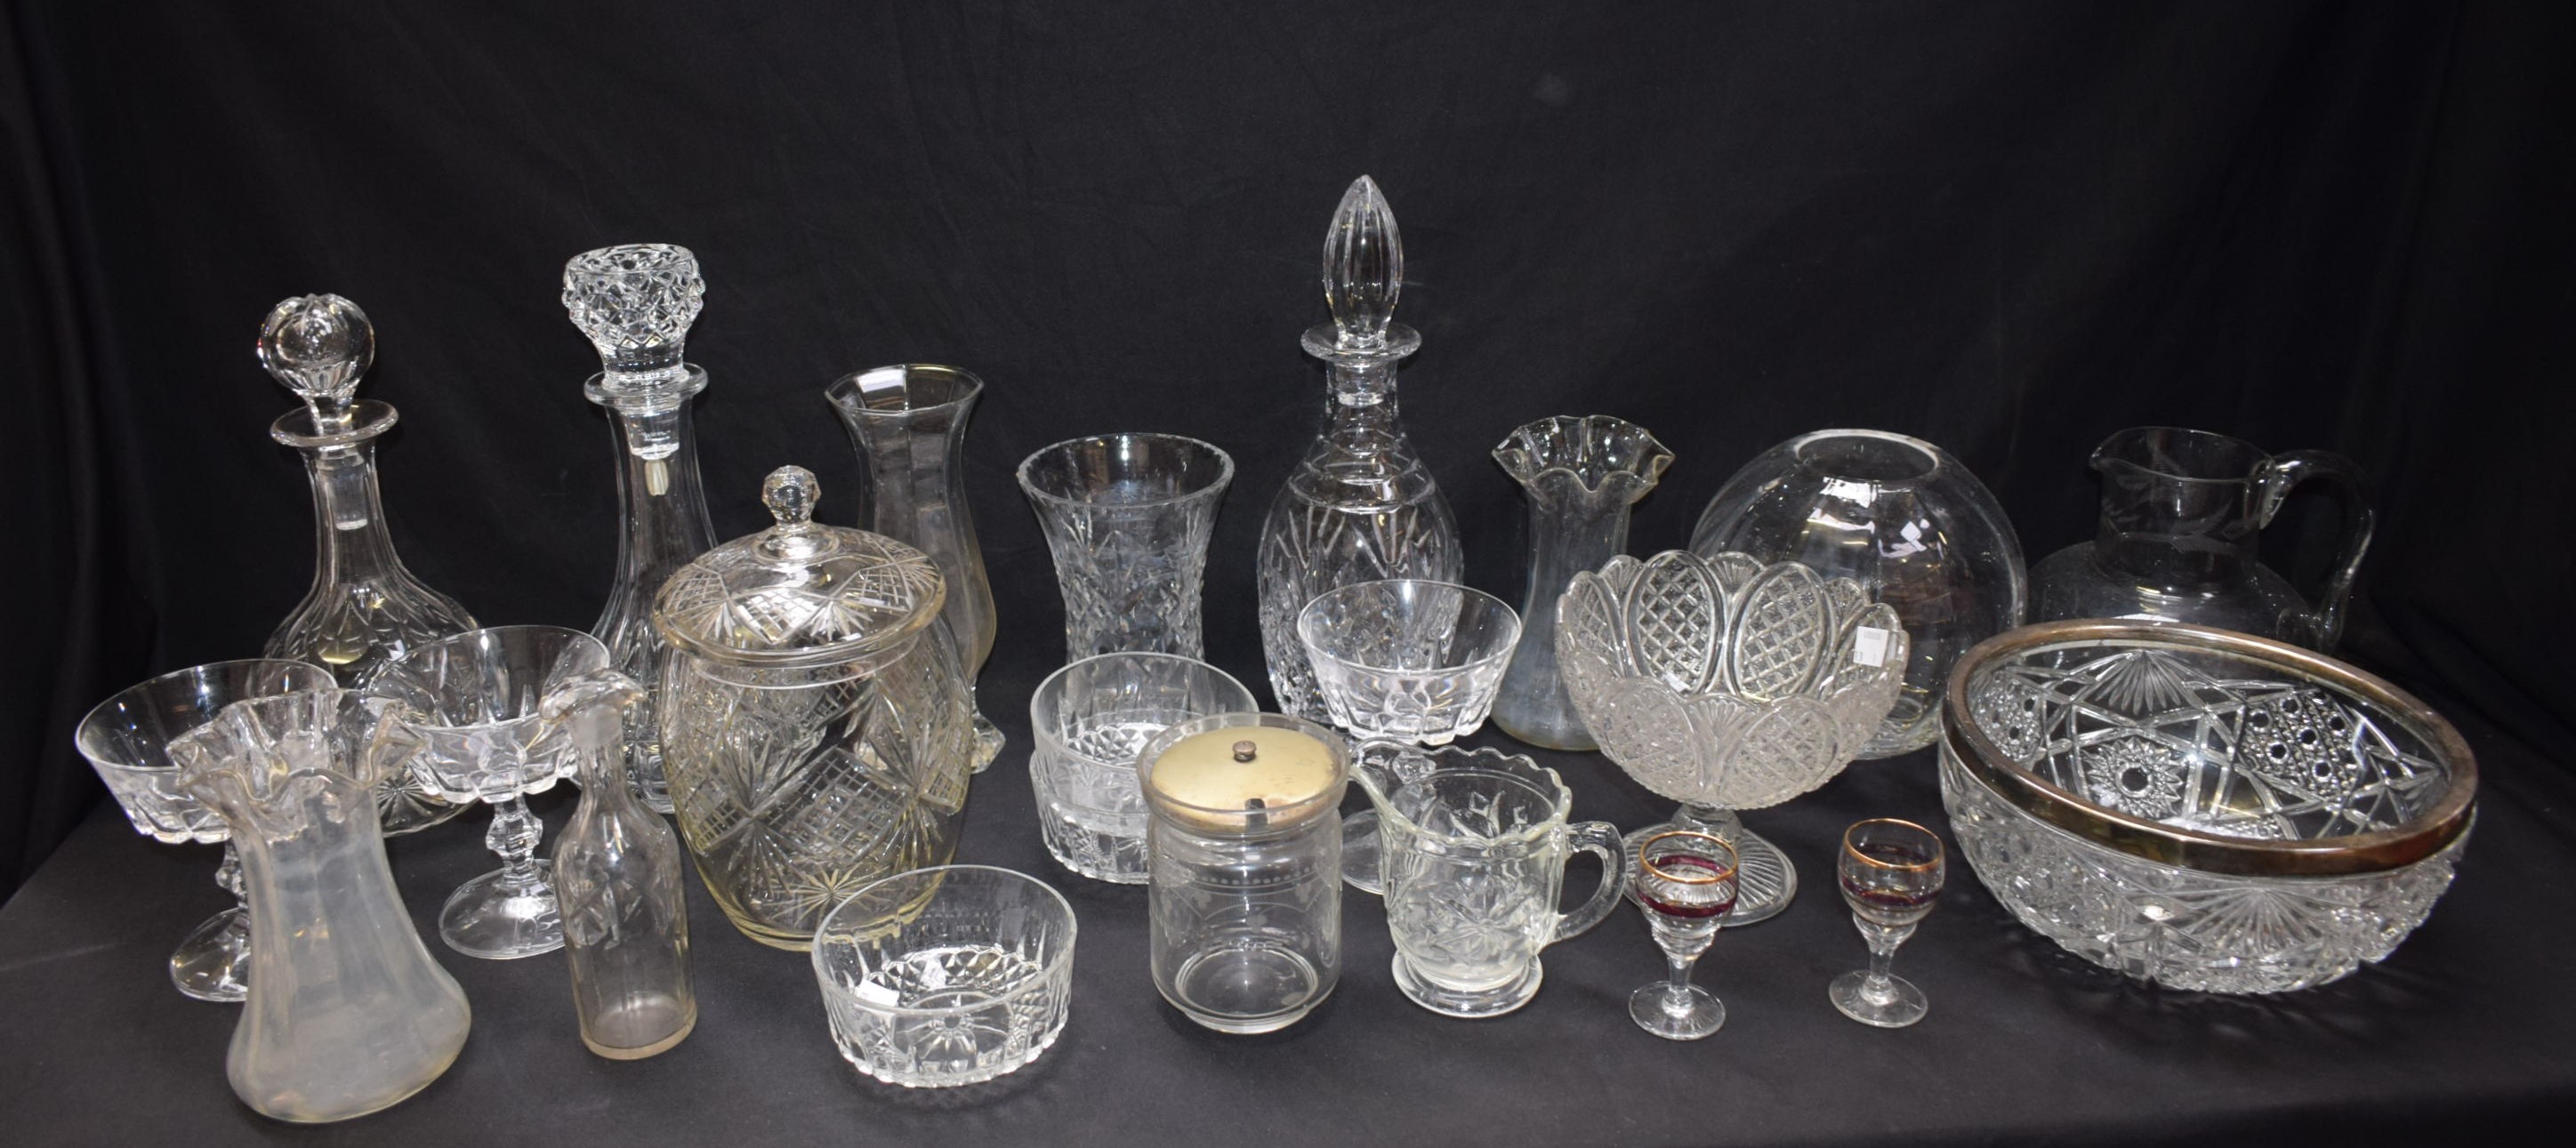 Glassware - cut glass decanters, vases, jugs,